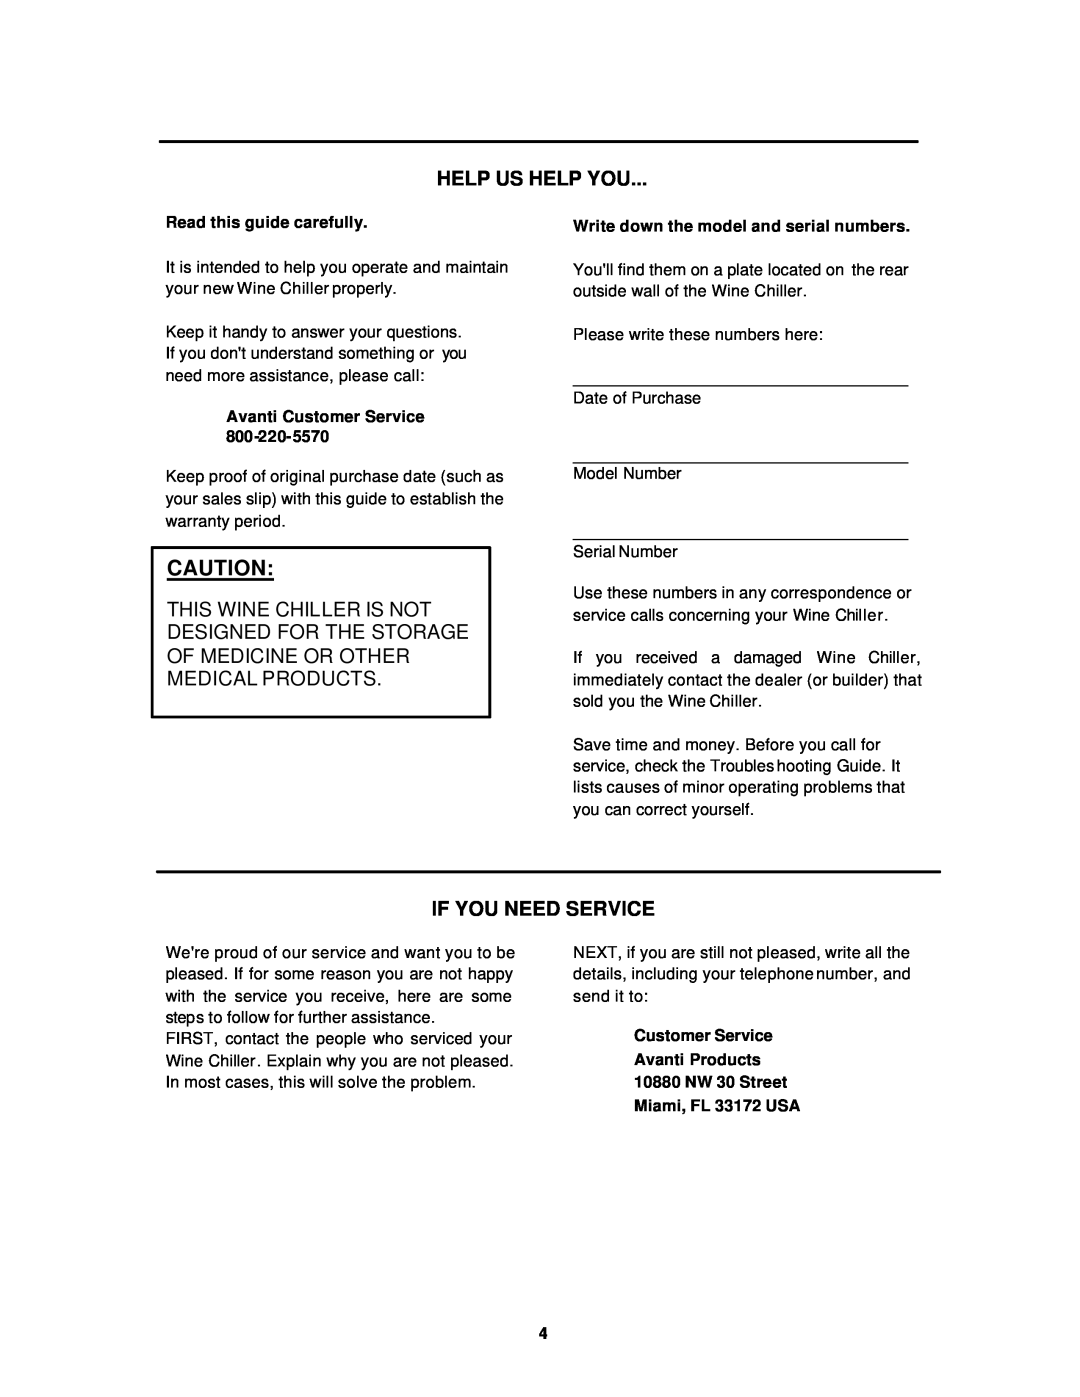 Avanti EWC28 instruction manual Help Us Help You, If You Need Service, Read this guide carefully, Avanti Customer Service 